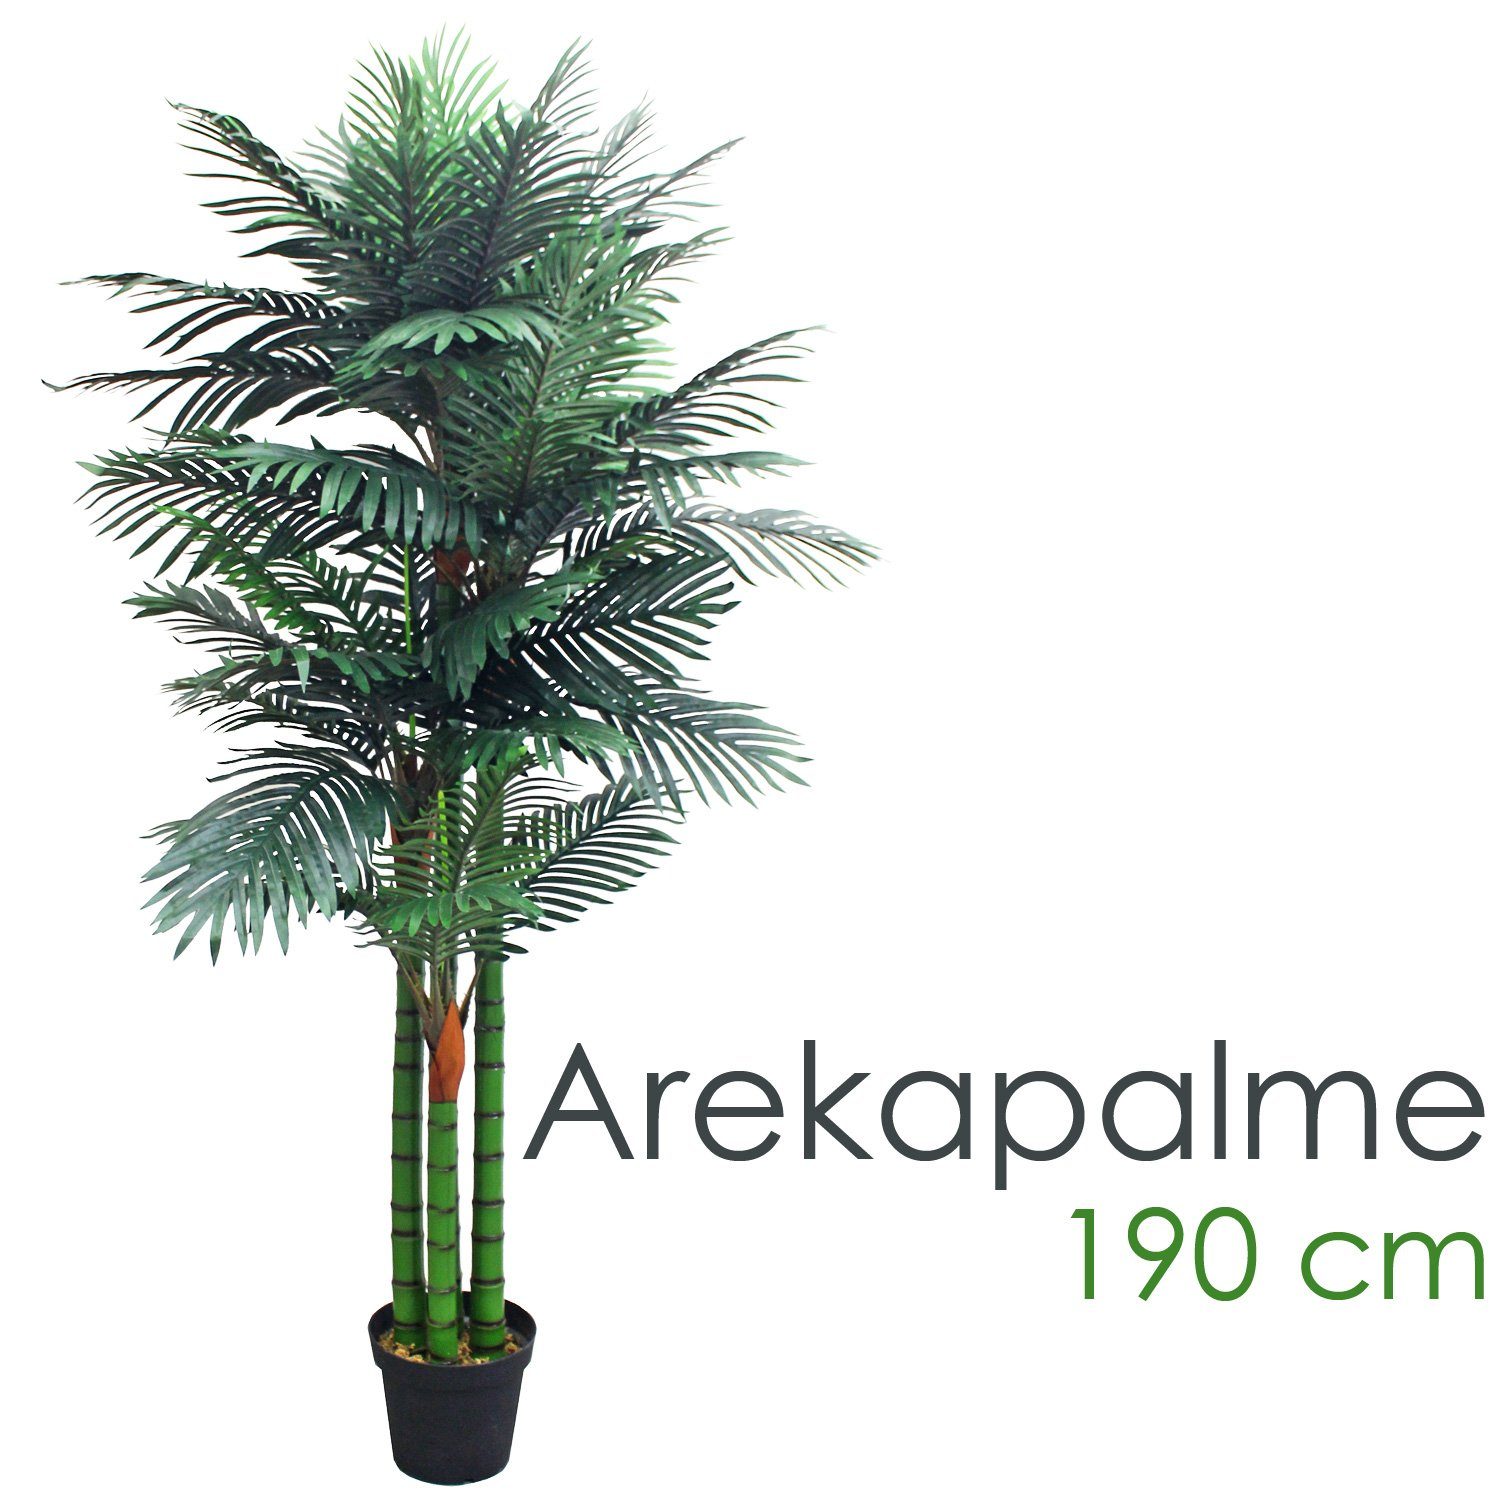 Kunstpflanze Palme Palmenbaum Arekapalme Kunstpflanze Künstliche Pflanze 190cm Decovego, Decovego